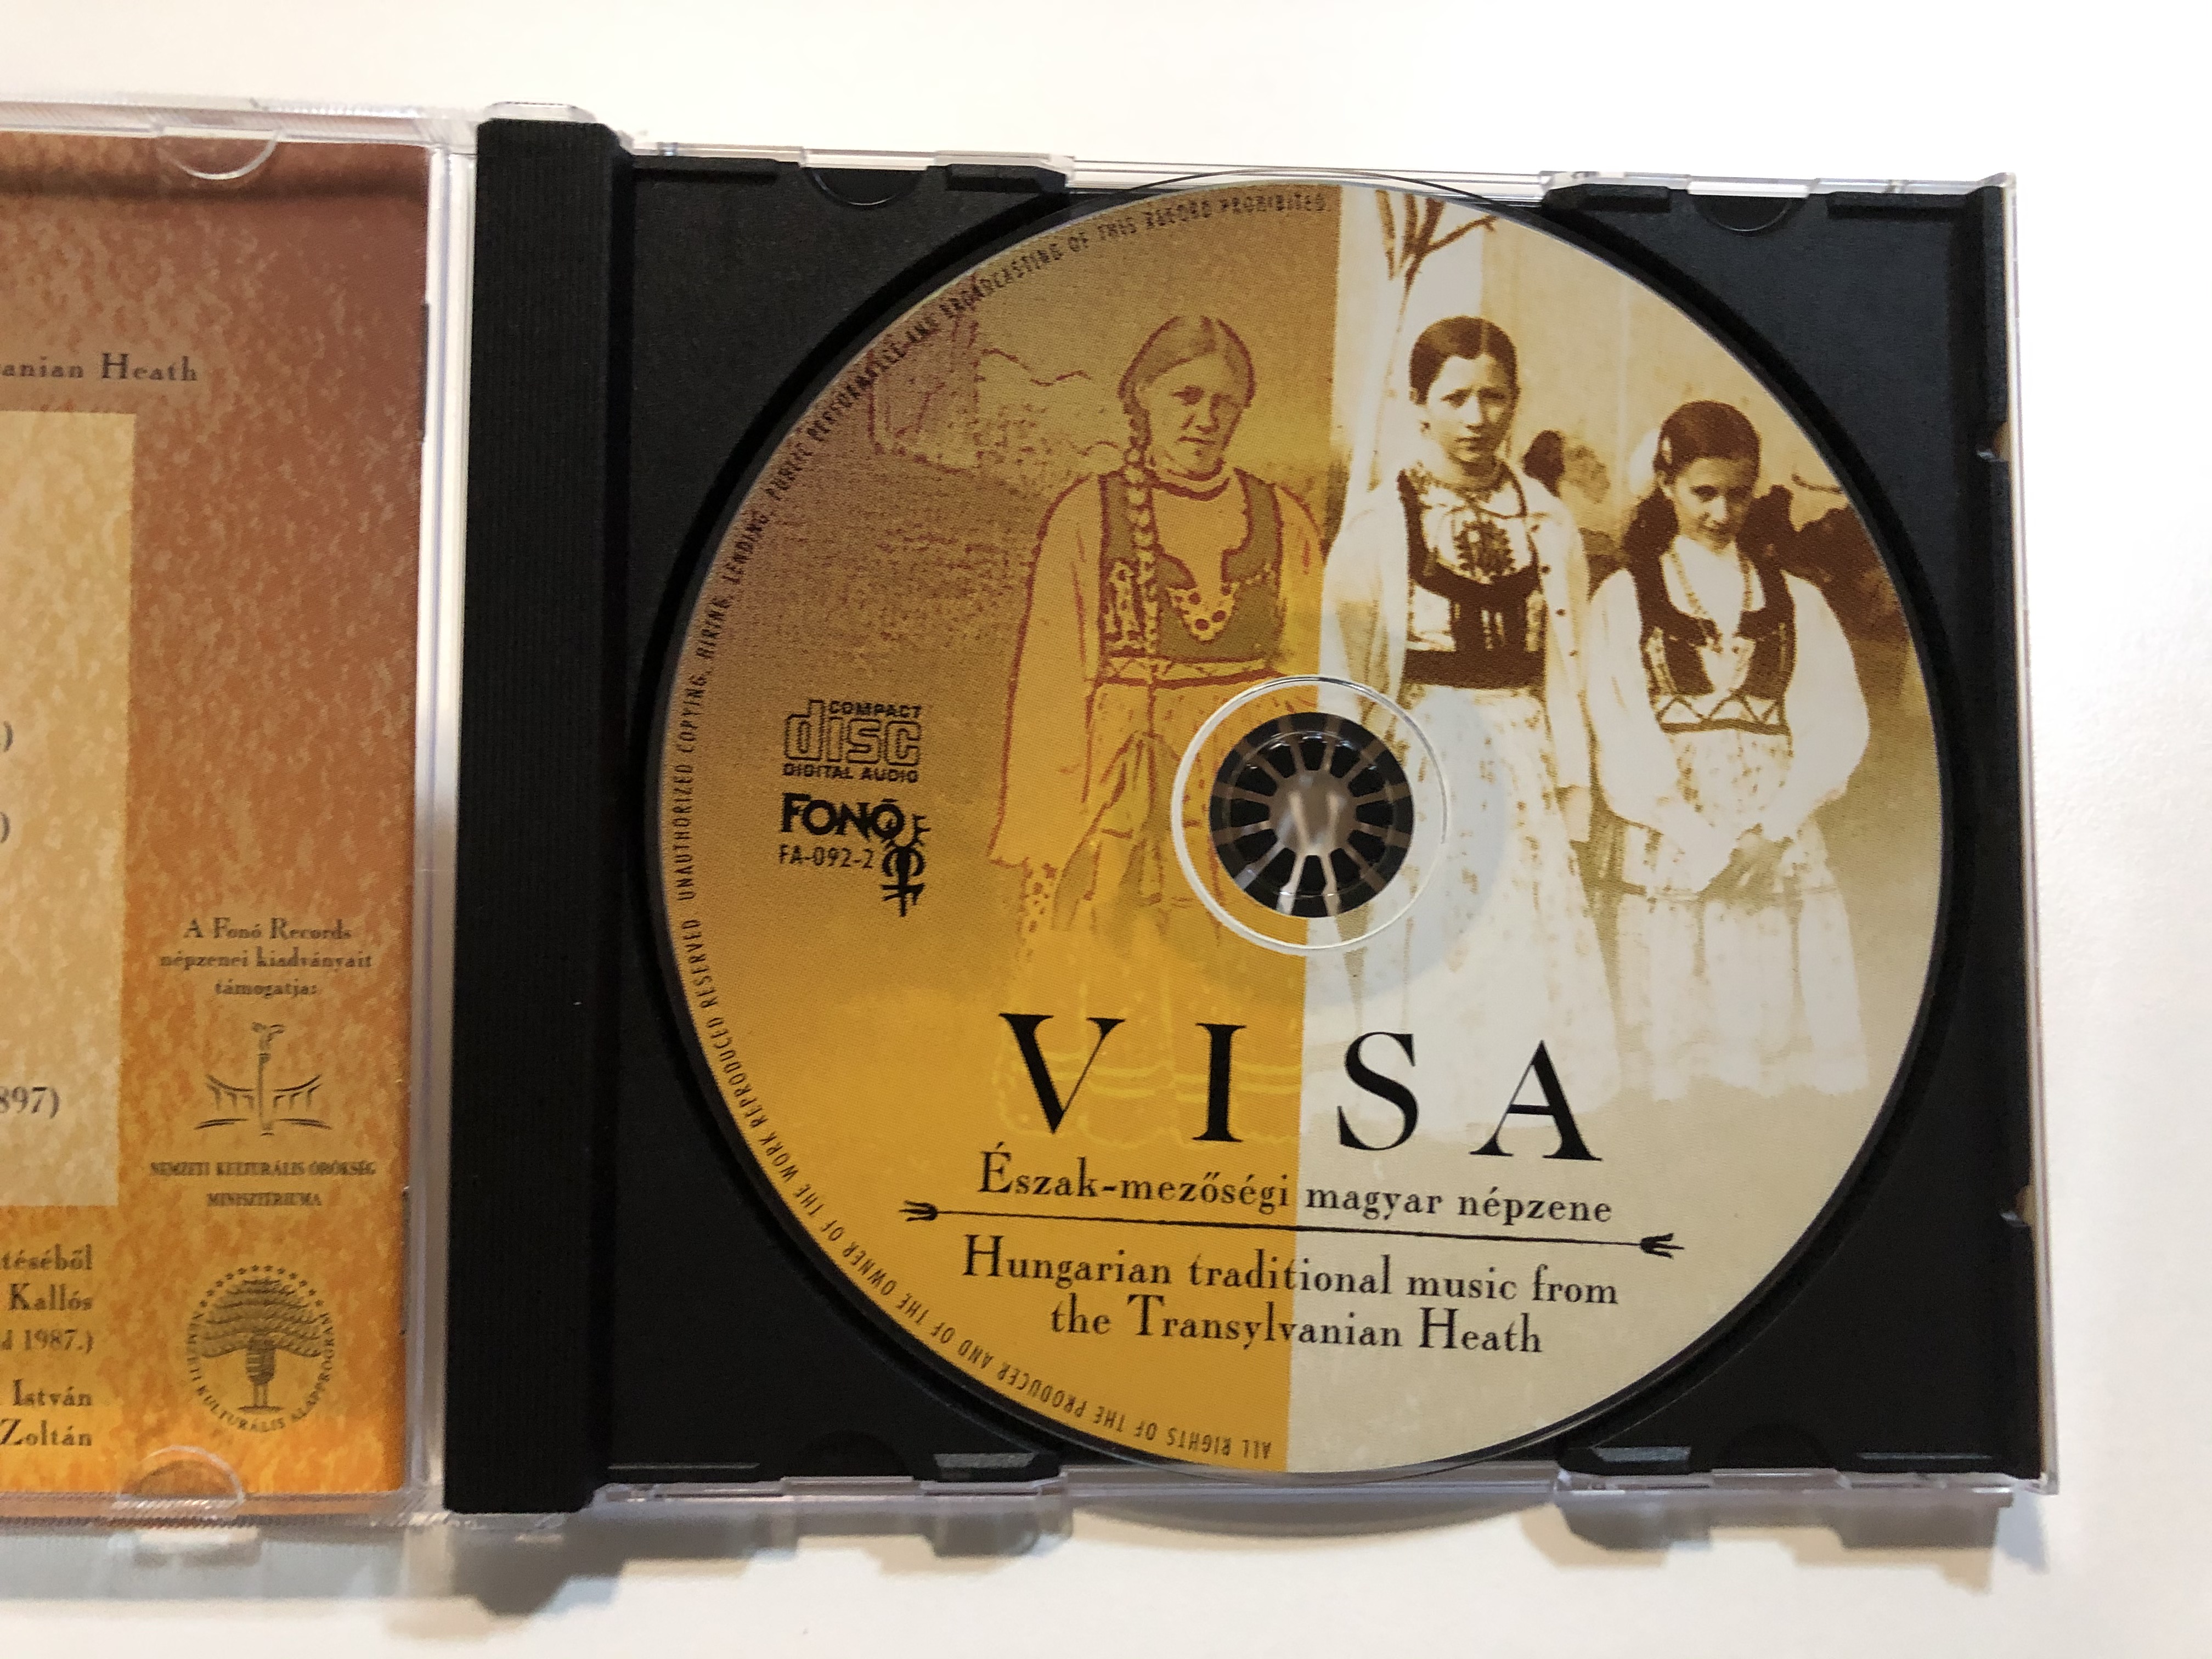 visa-szak-mez-s-gi-magyar-n-pzene-hungarian-traditional-music-from-the-transylvanian-heath-fon-records-audio-cd-2001-fa-092-2-4-.jpg